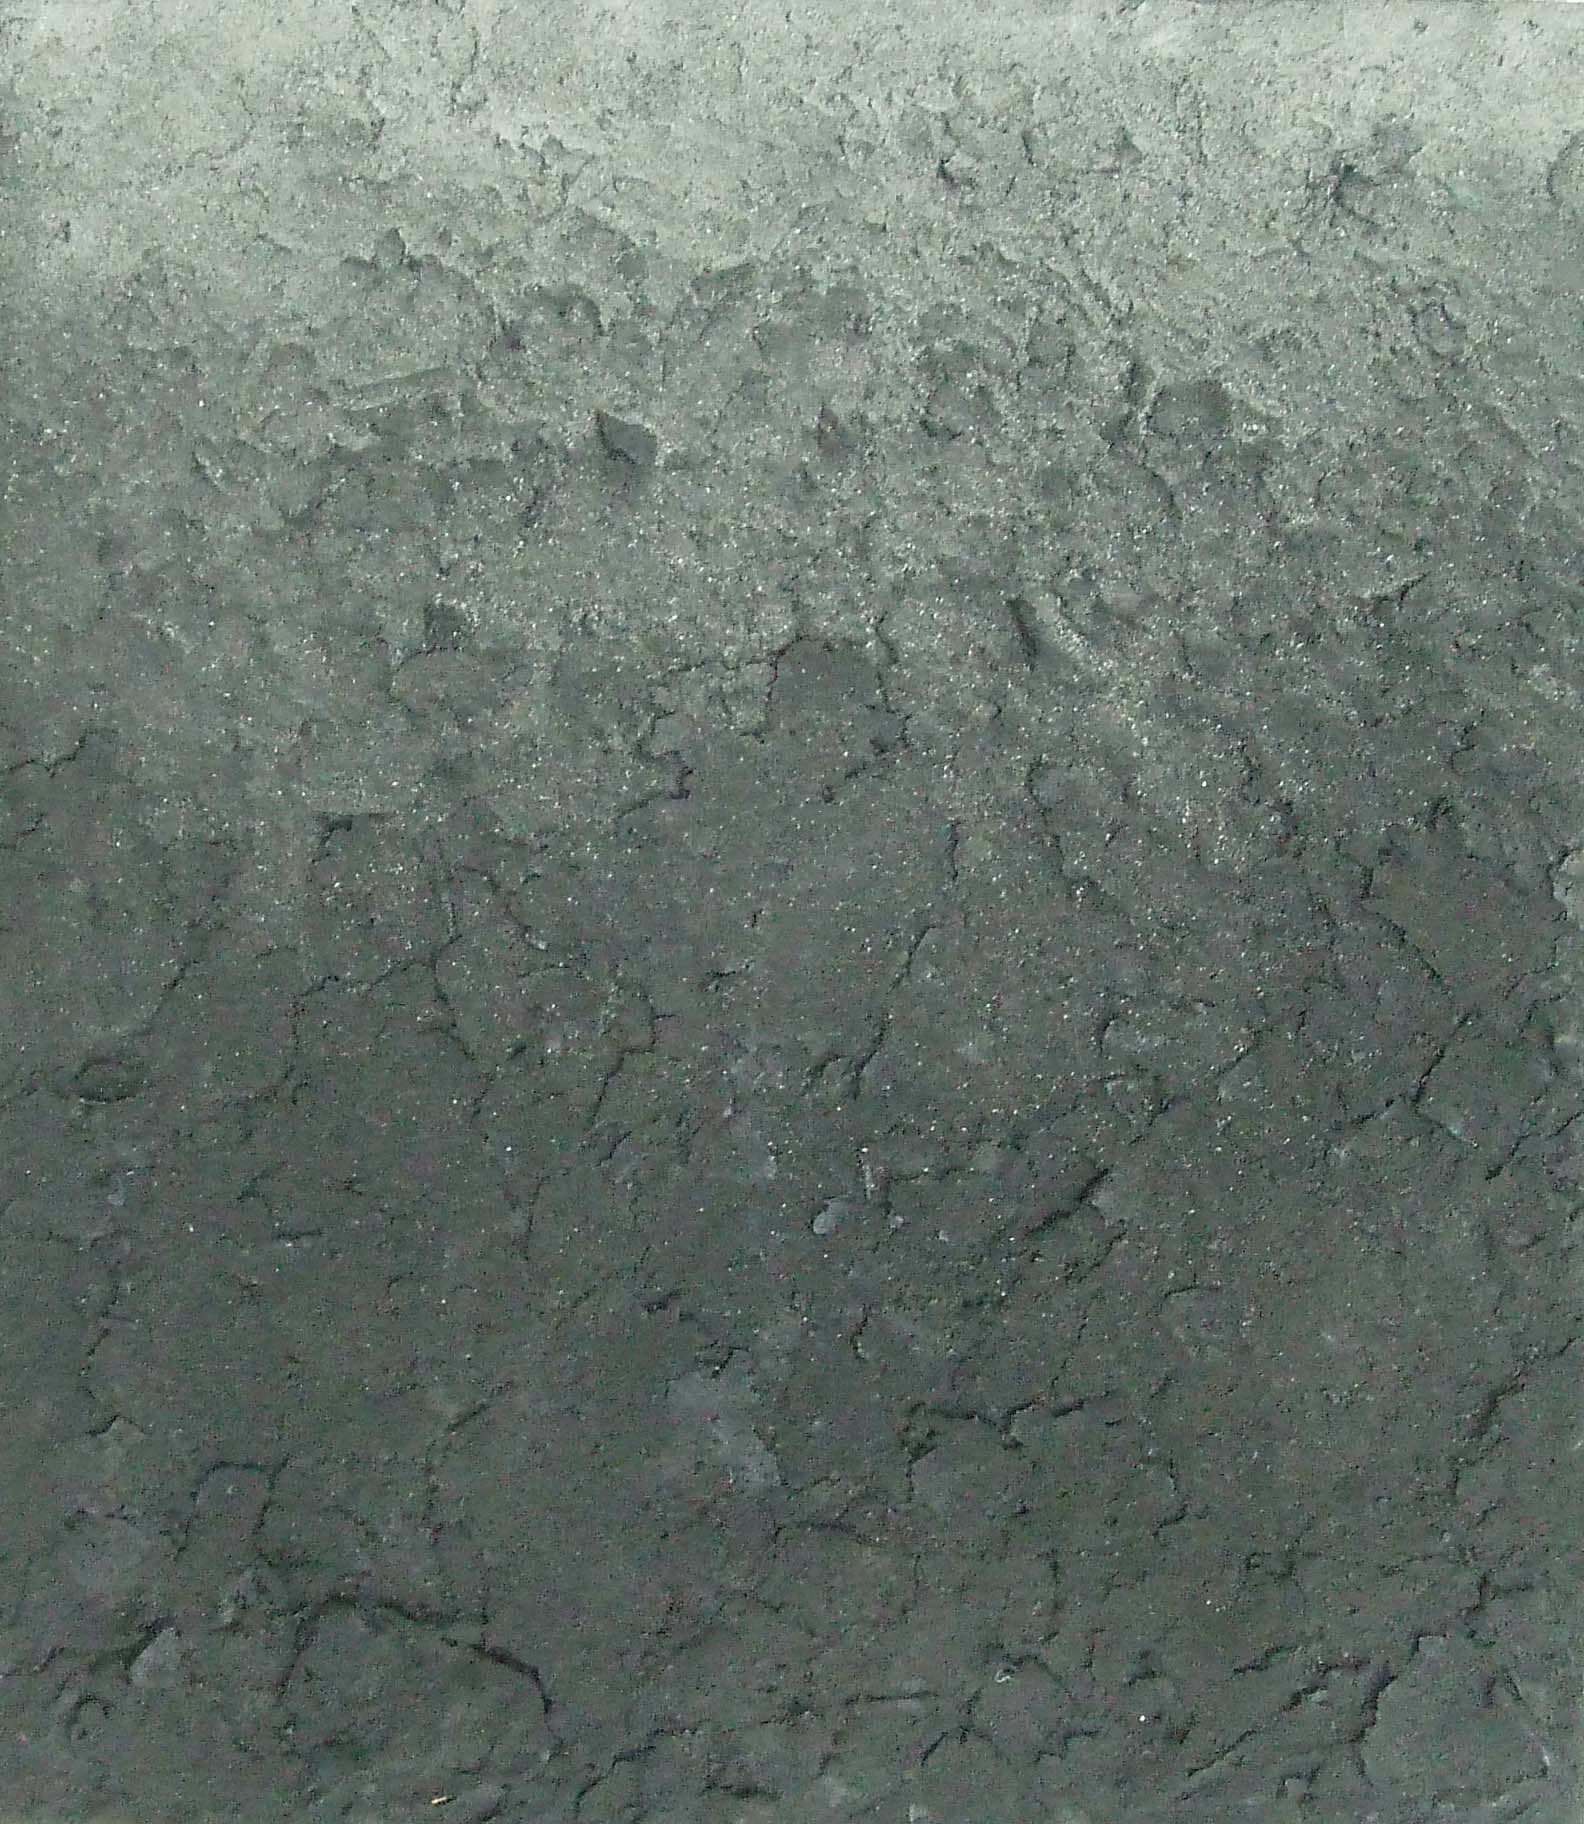 Hřbitovní zeď, 2011, uhel, popel a akryl na plátně, 70x60cm